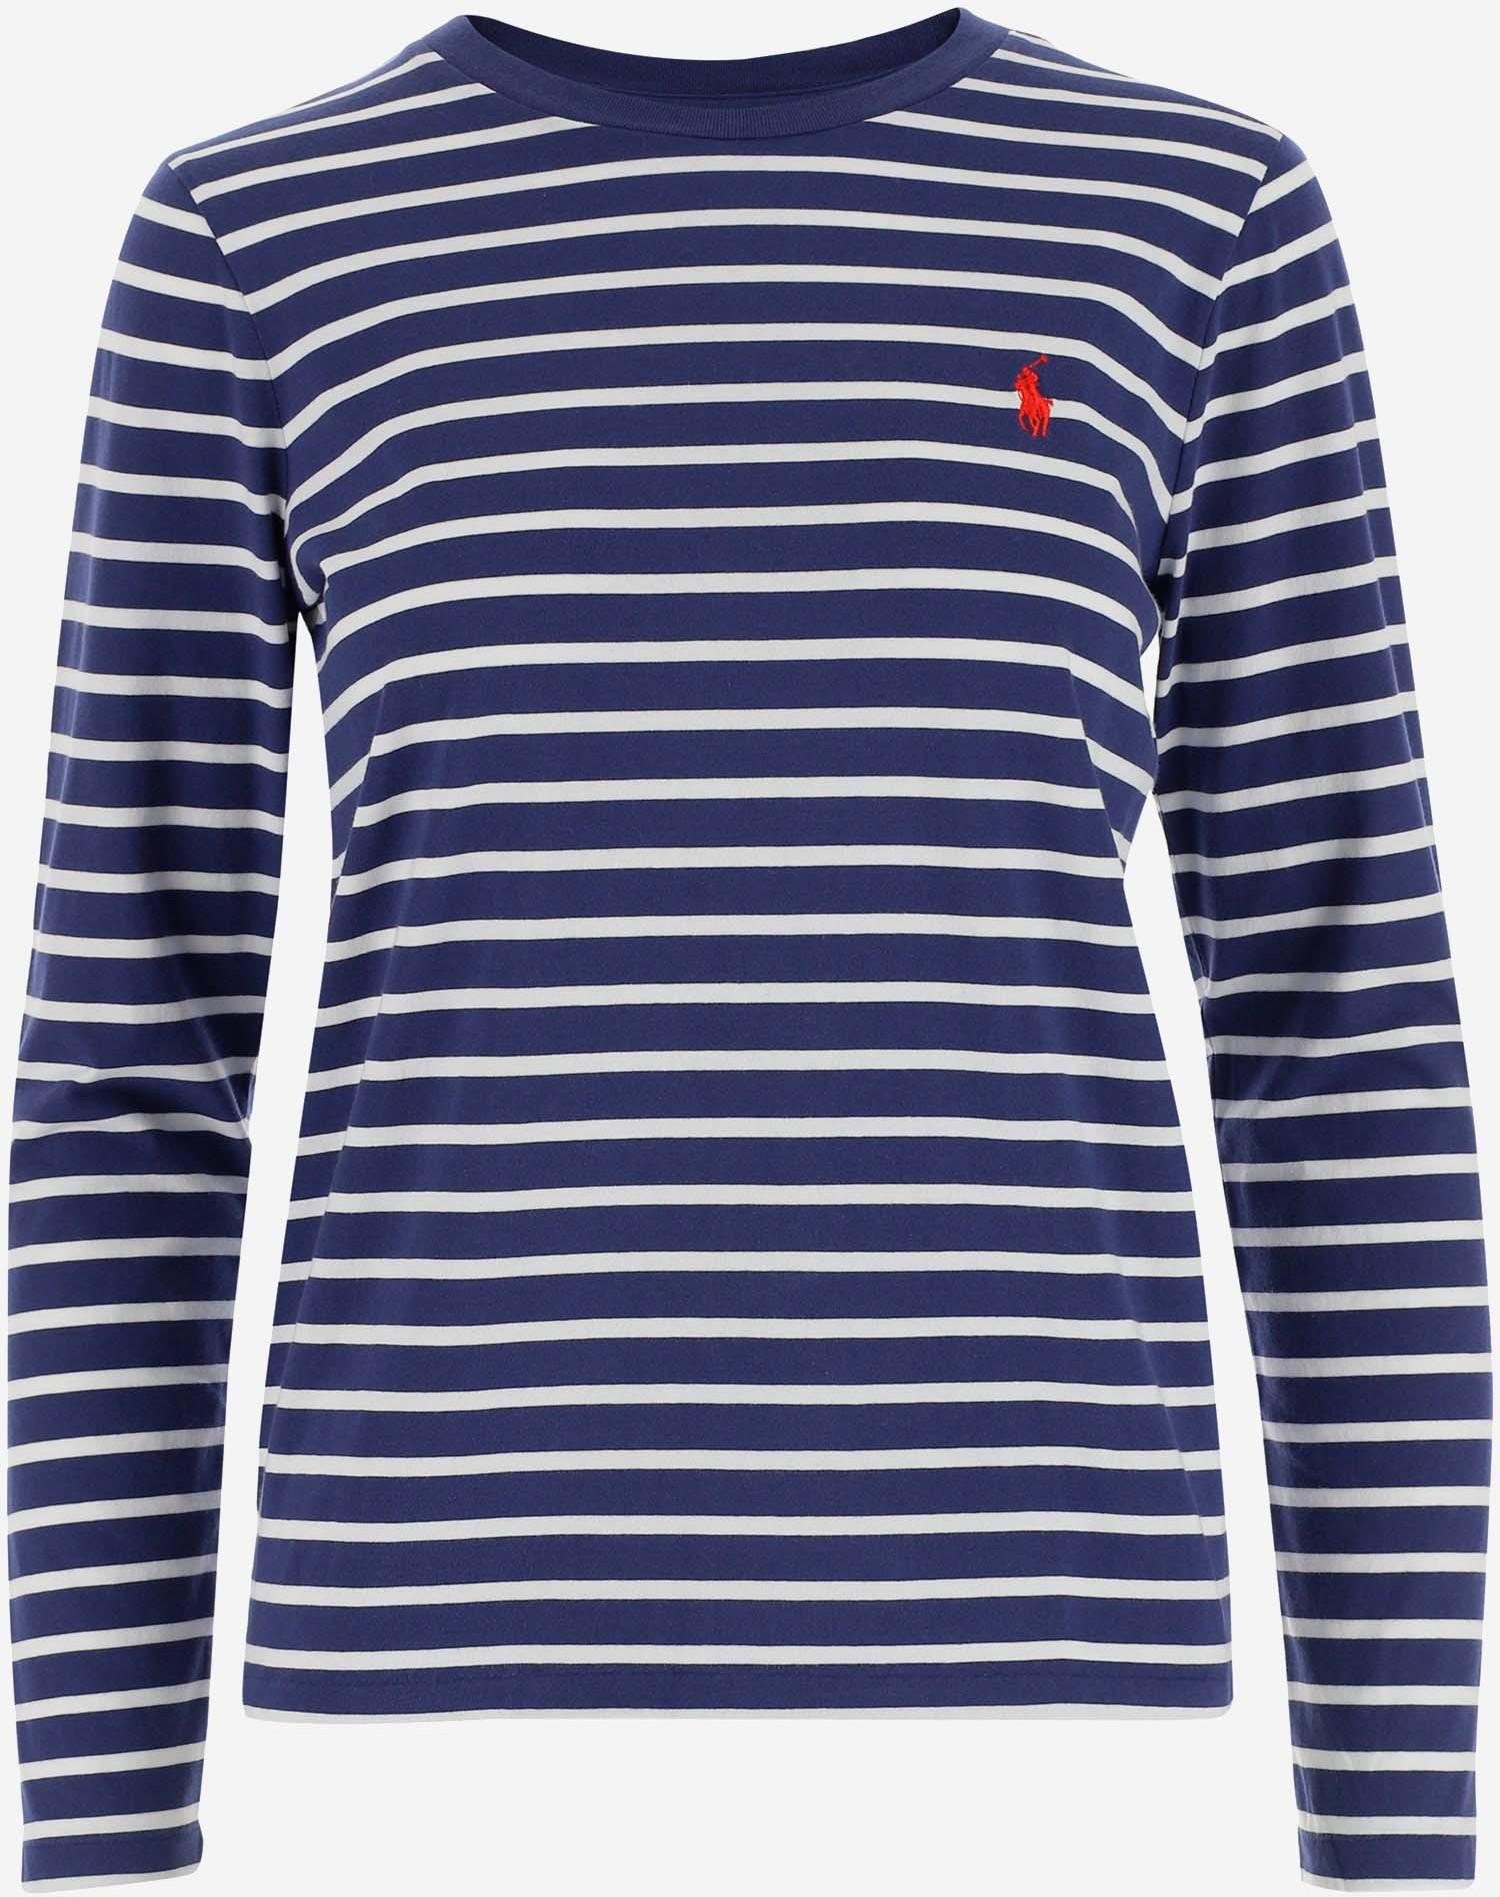 Ralph Lauren Blue/White Striped Cotton Women's T-shirt w/Long